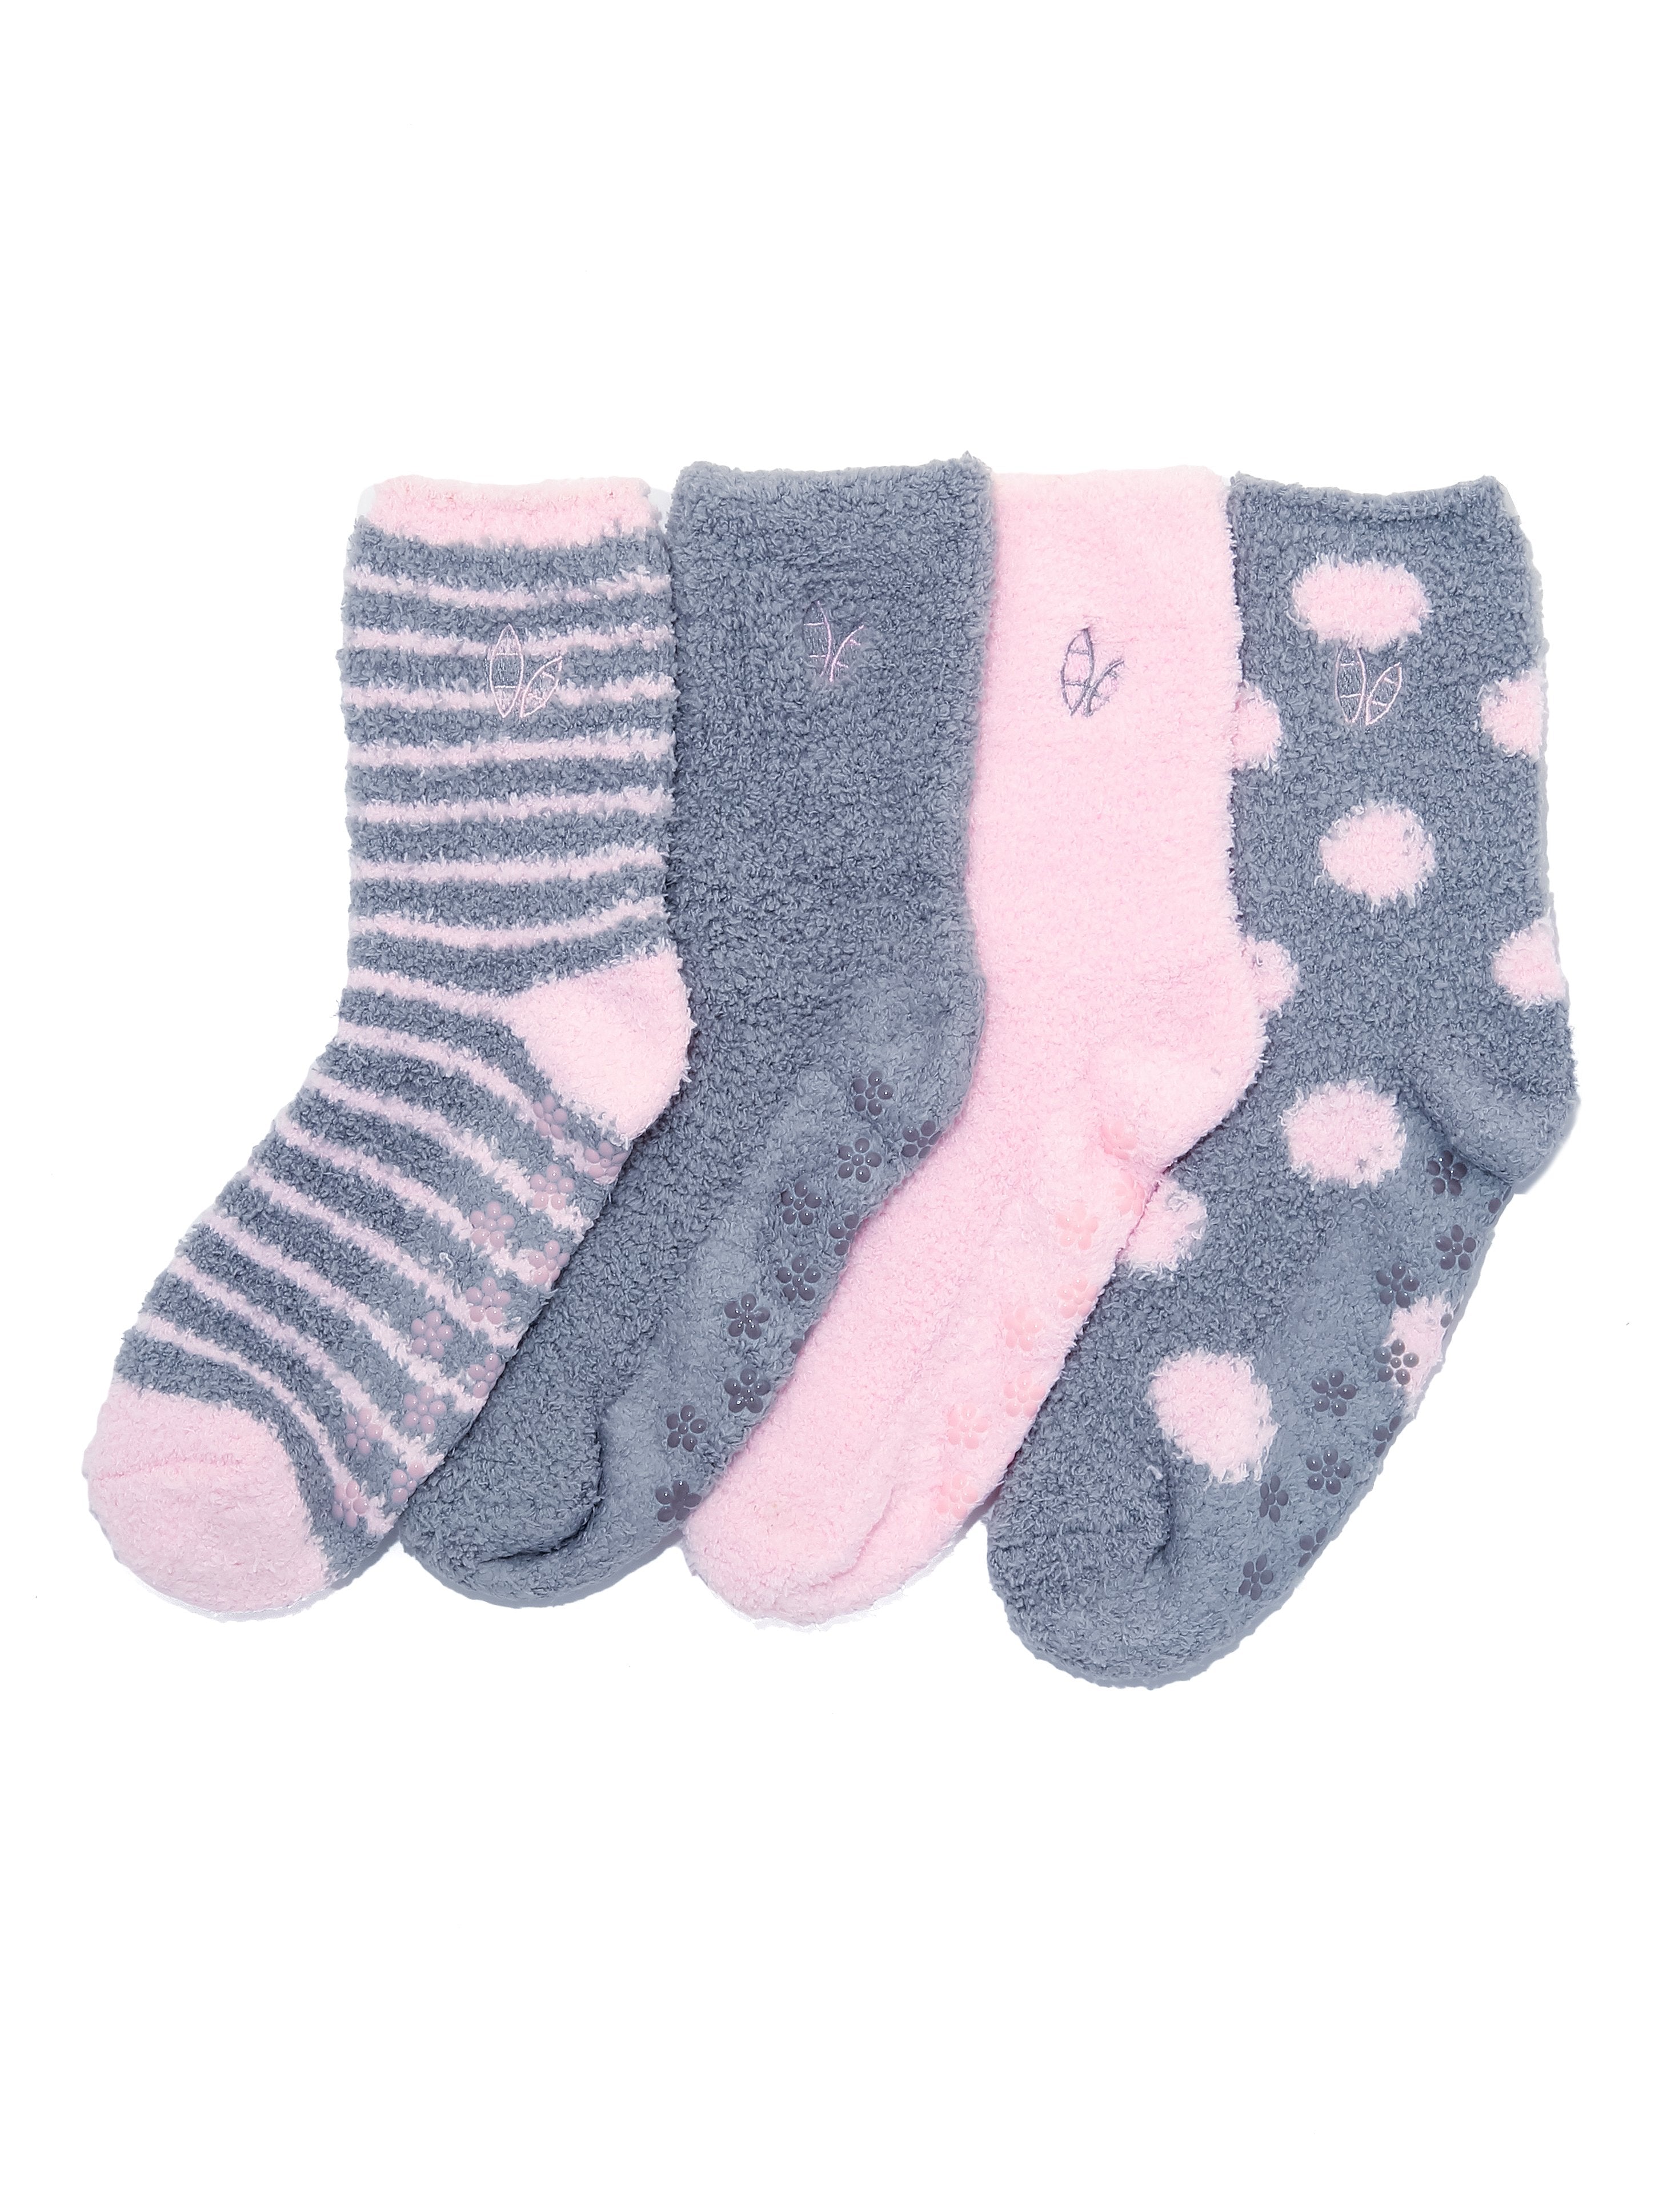 Women's (4 Pairs) Soft Anti-Skid Fuzzy Winter Crew Socks - Set A2